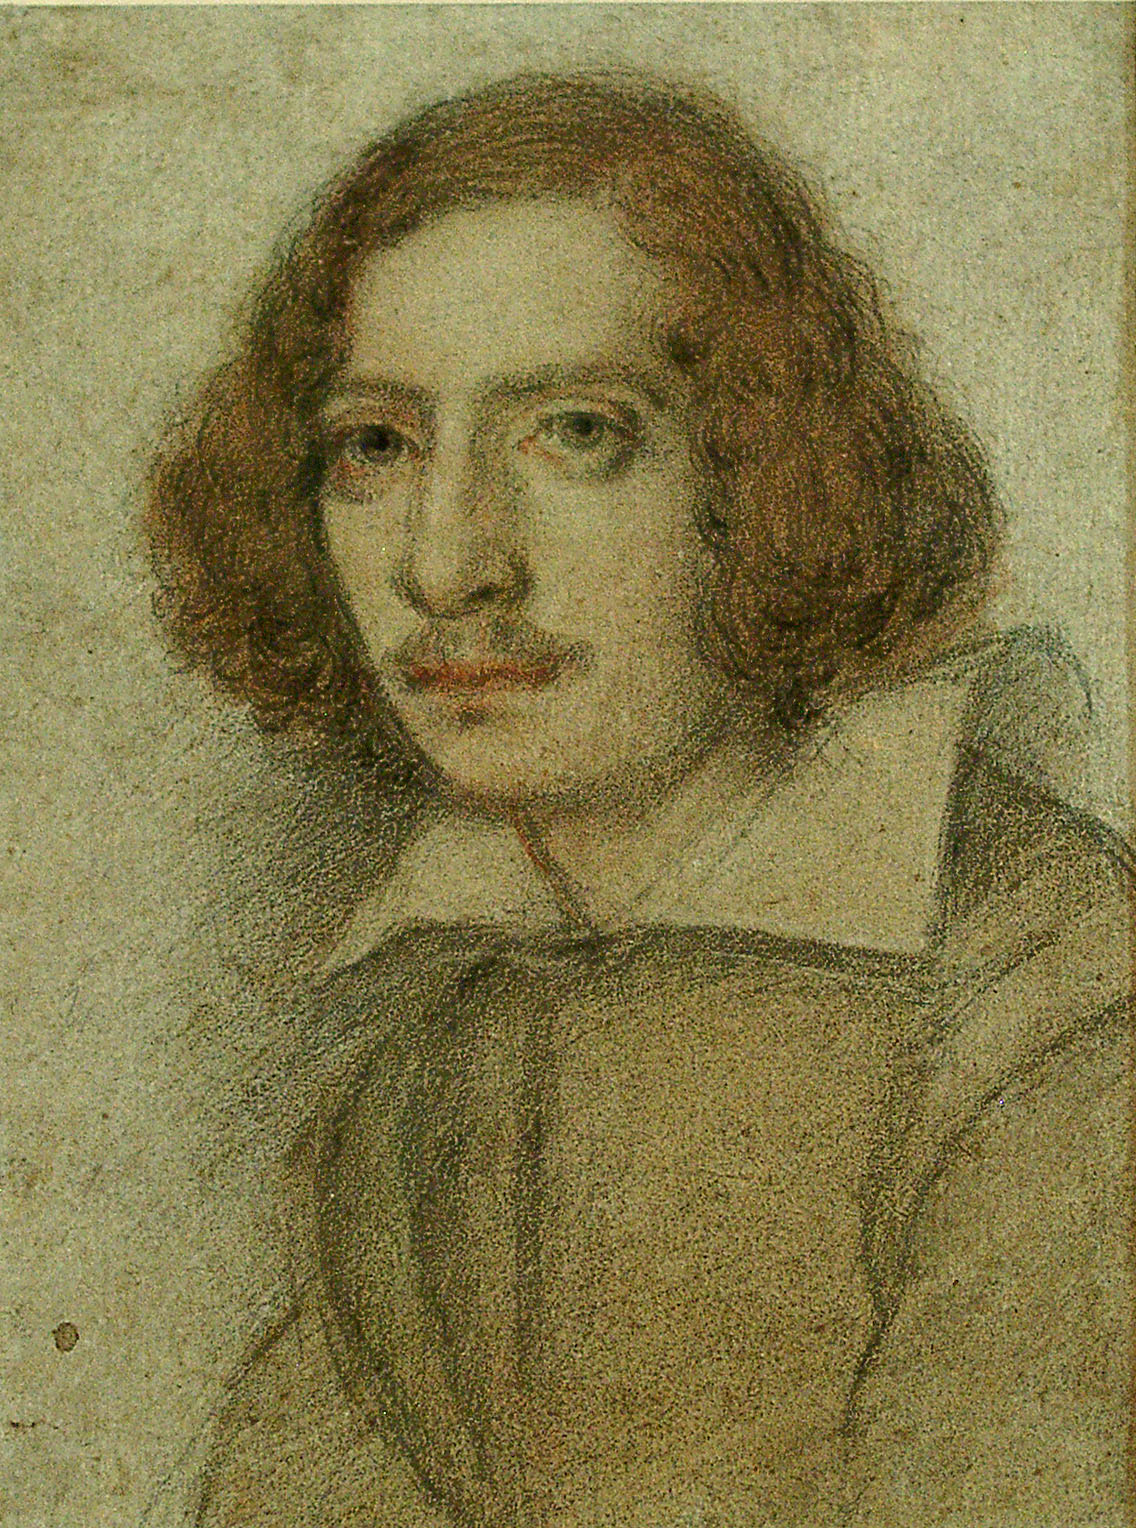 [GR001+-+Gianlorenzo+Bernini+-+1598-1680+-+Portrait+of+a+Man.jpg]